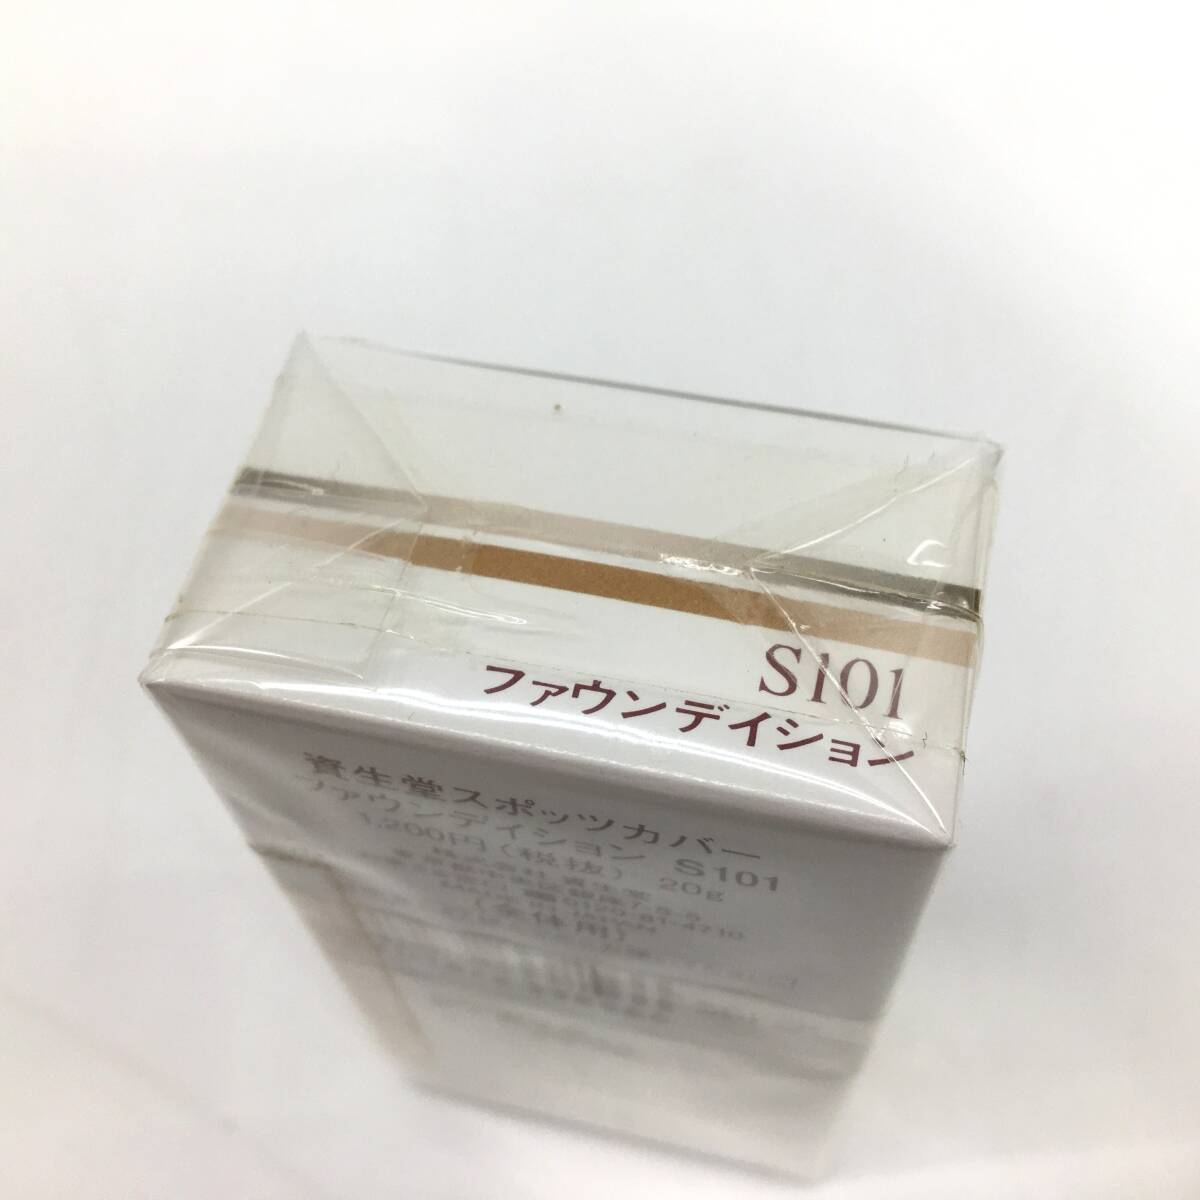  Shiseido /SHISEIDO spo tsu cover faunjishon/ foundation 2 piece set SPOTSCOVER S101 20g beige scalar whole for 24e.NS